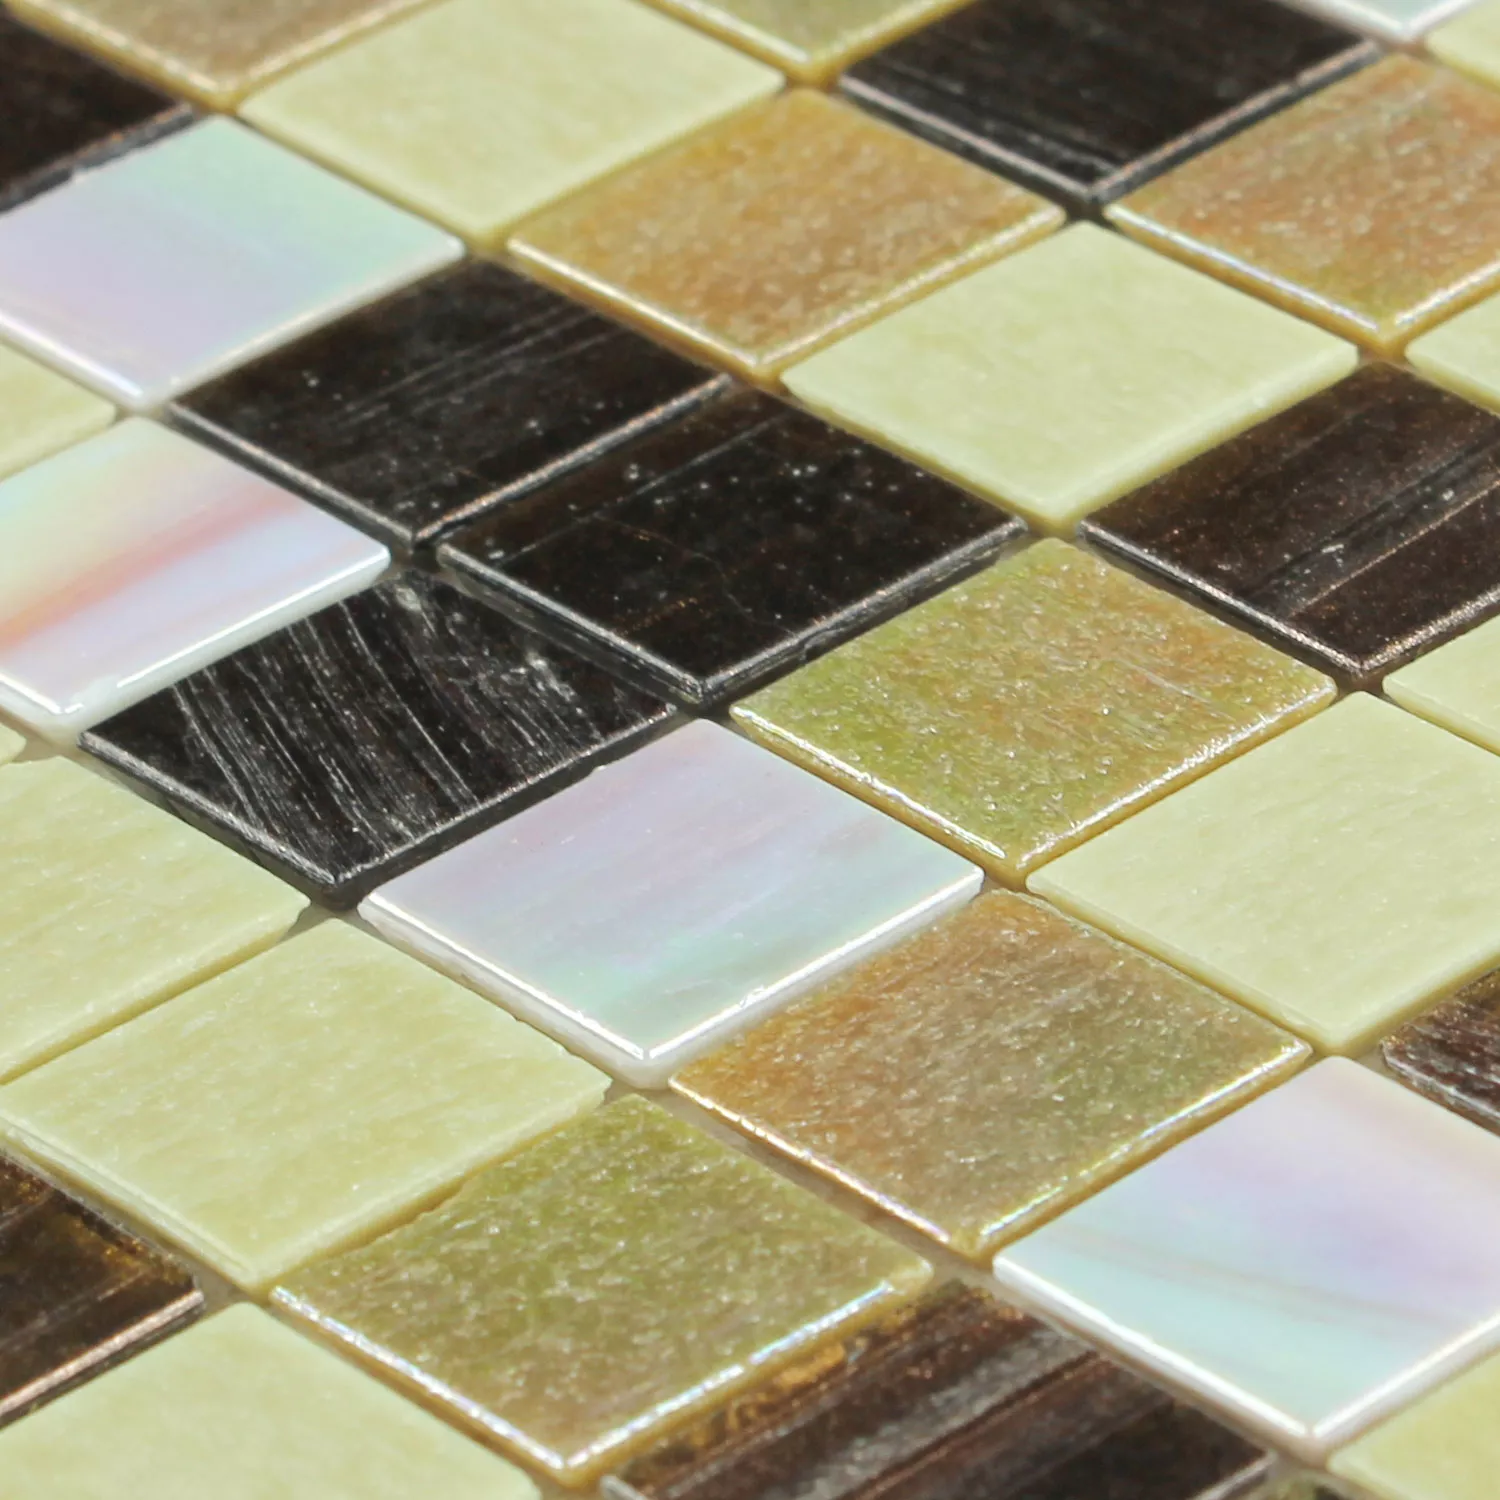 Mosaic Tiles Trend-Vi Glass Evolution